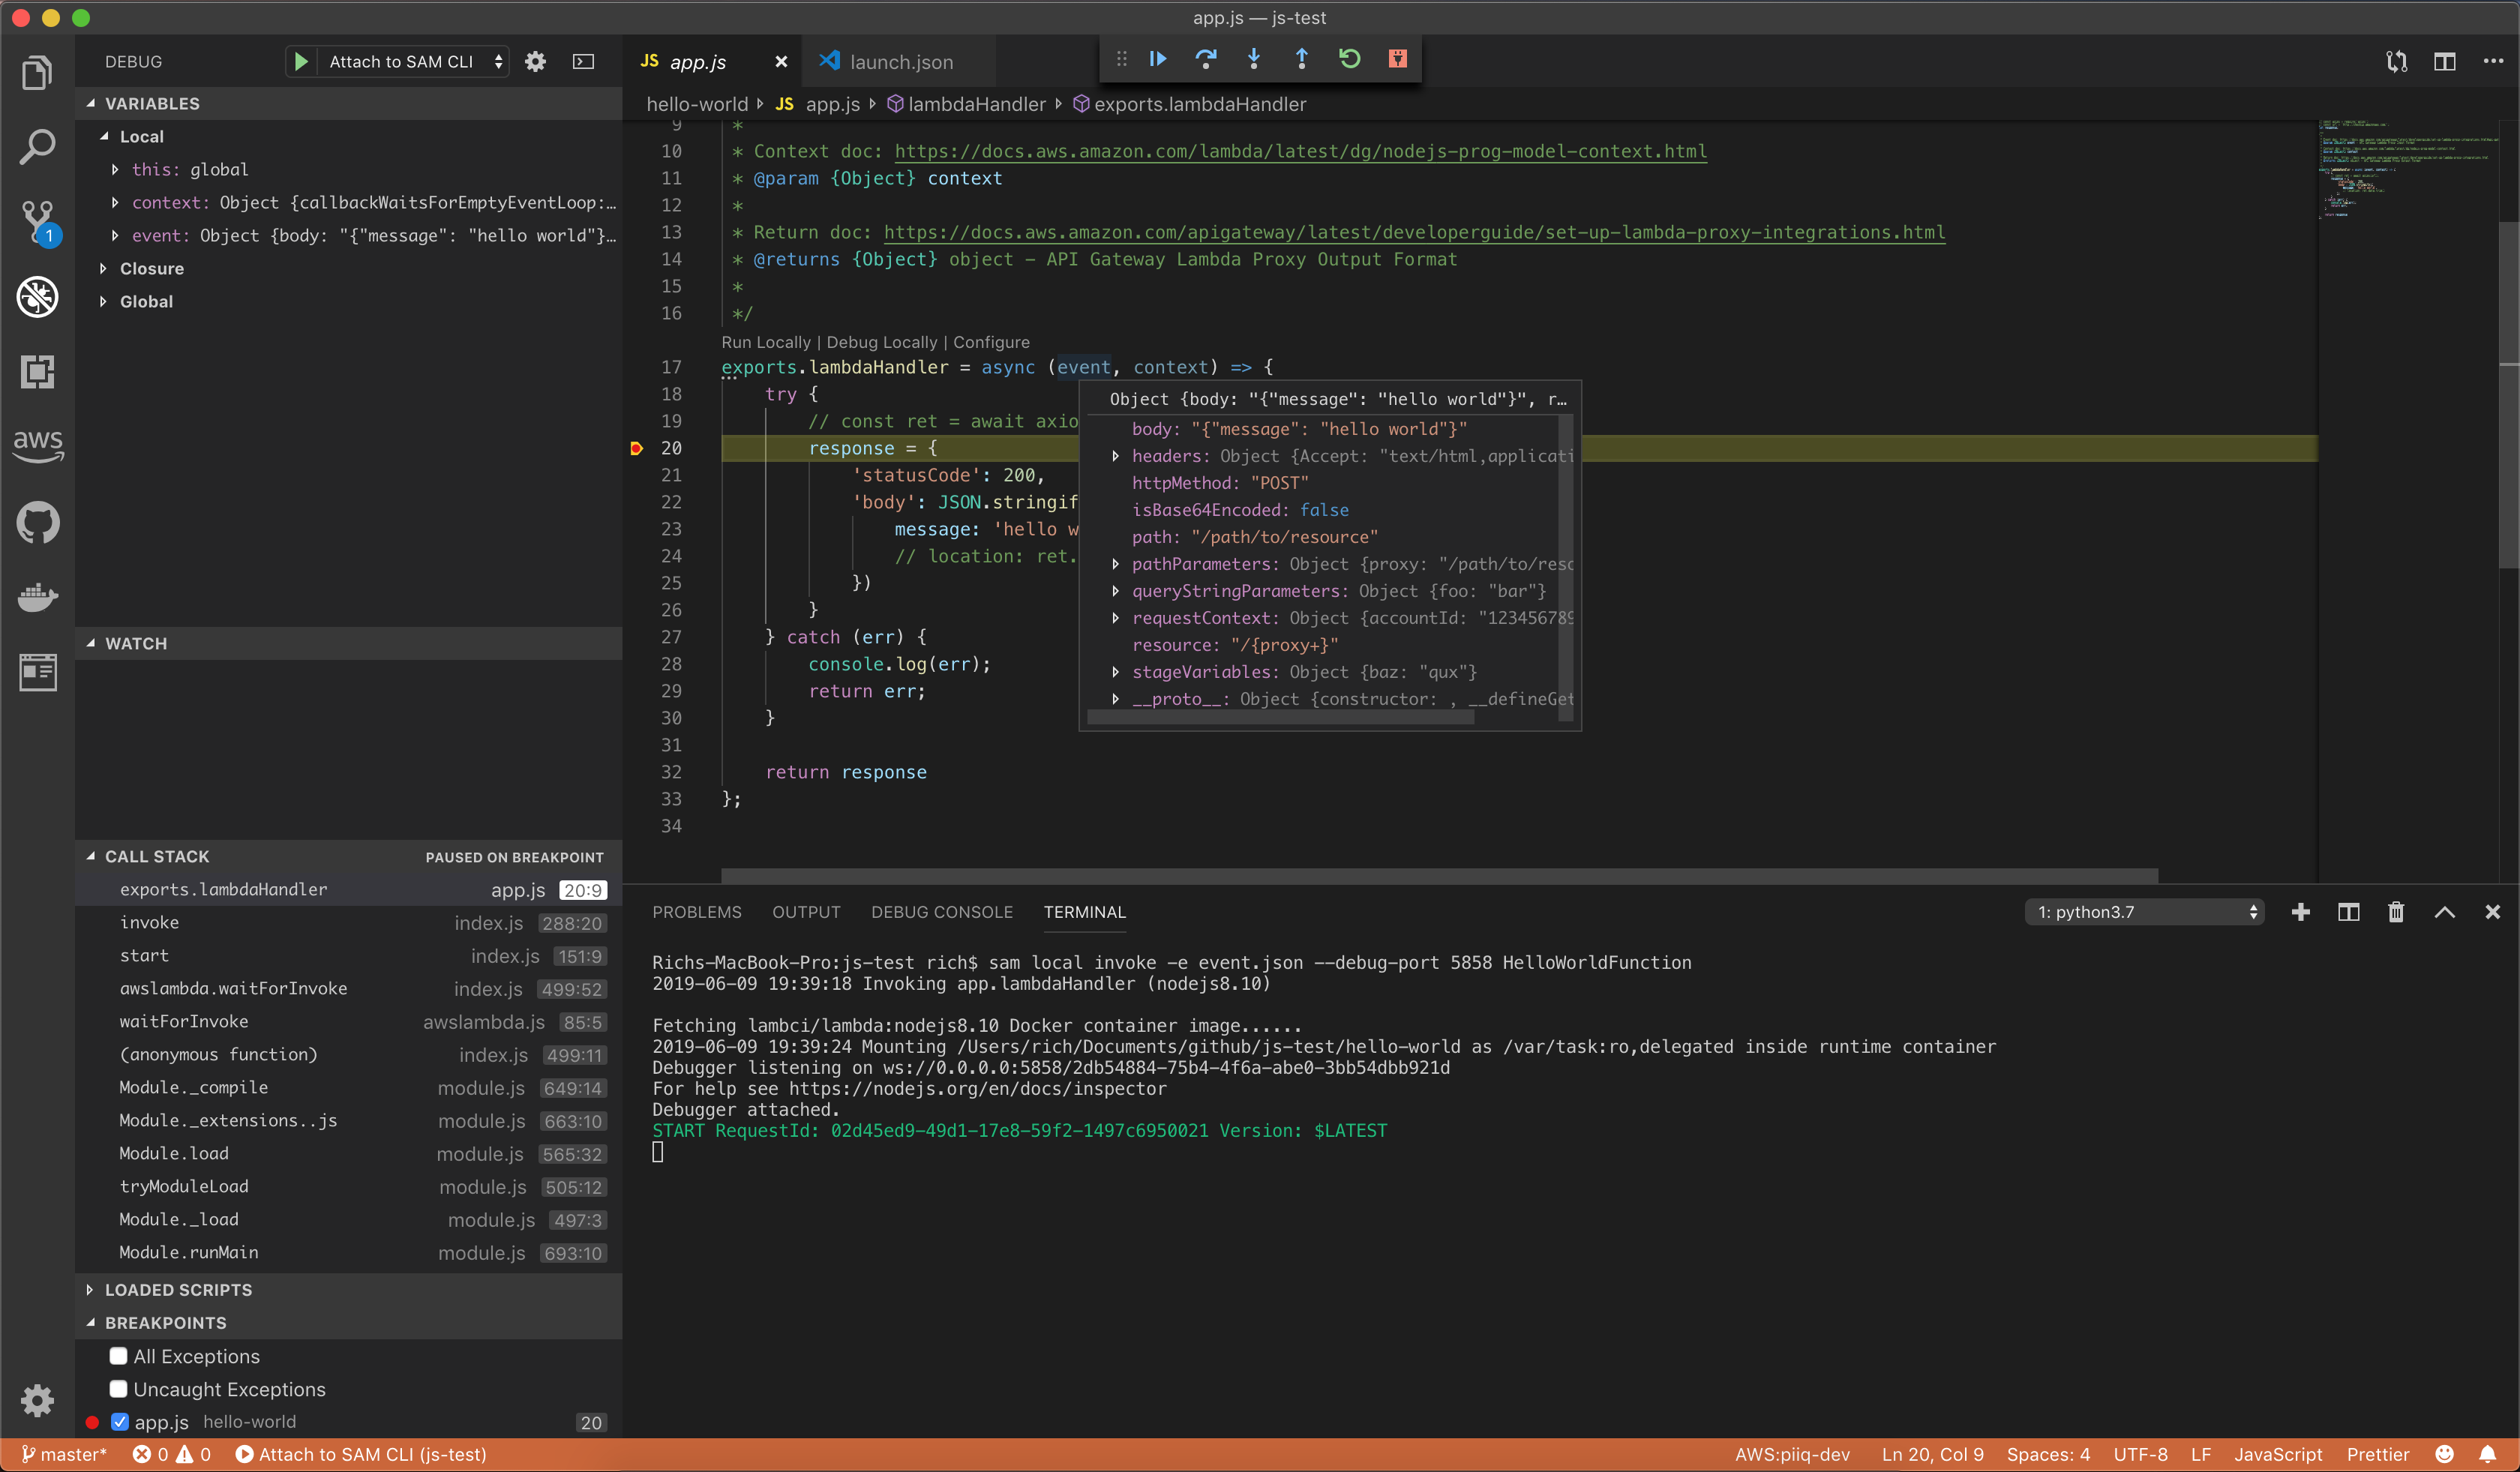 VS Code running in debugging mode